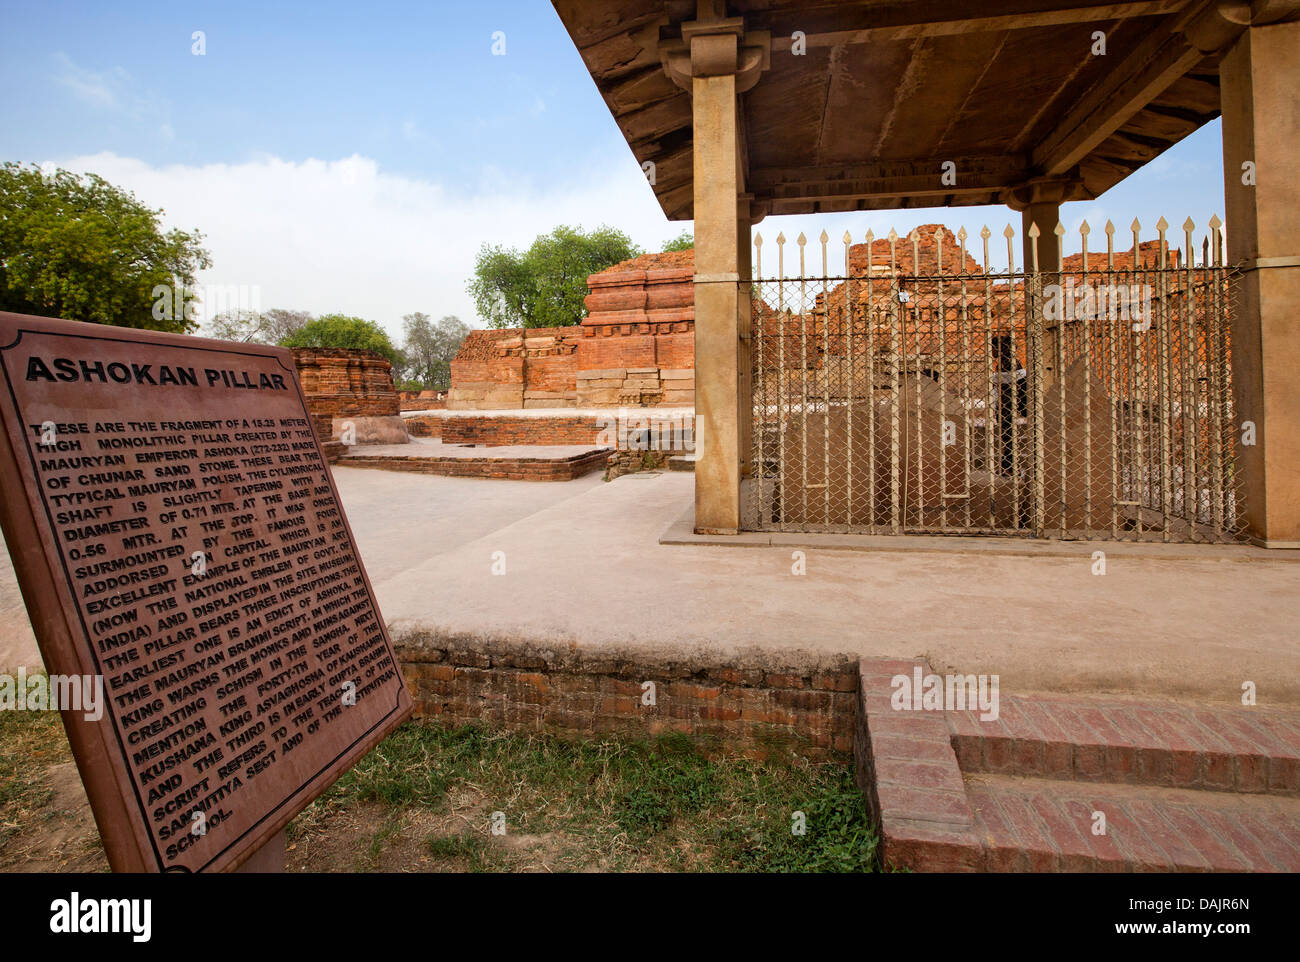 Ruins of Ashoka Pillars at an archaeological site, Sarnath, Varanasi, Uttar Pradesh, India Stock Photo